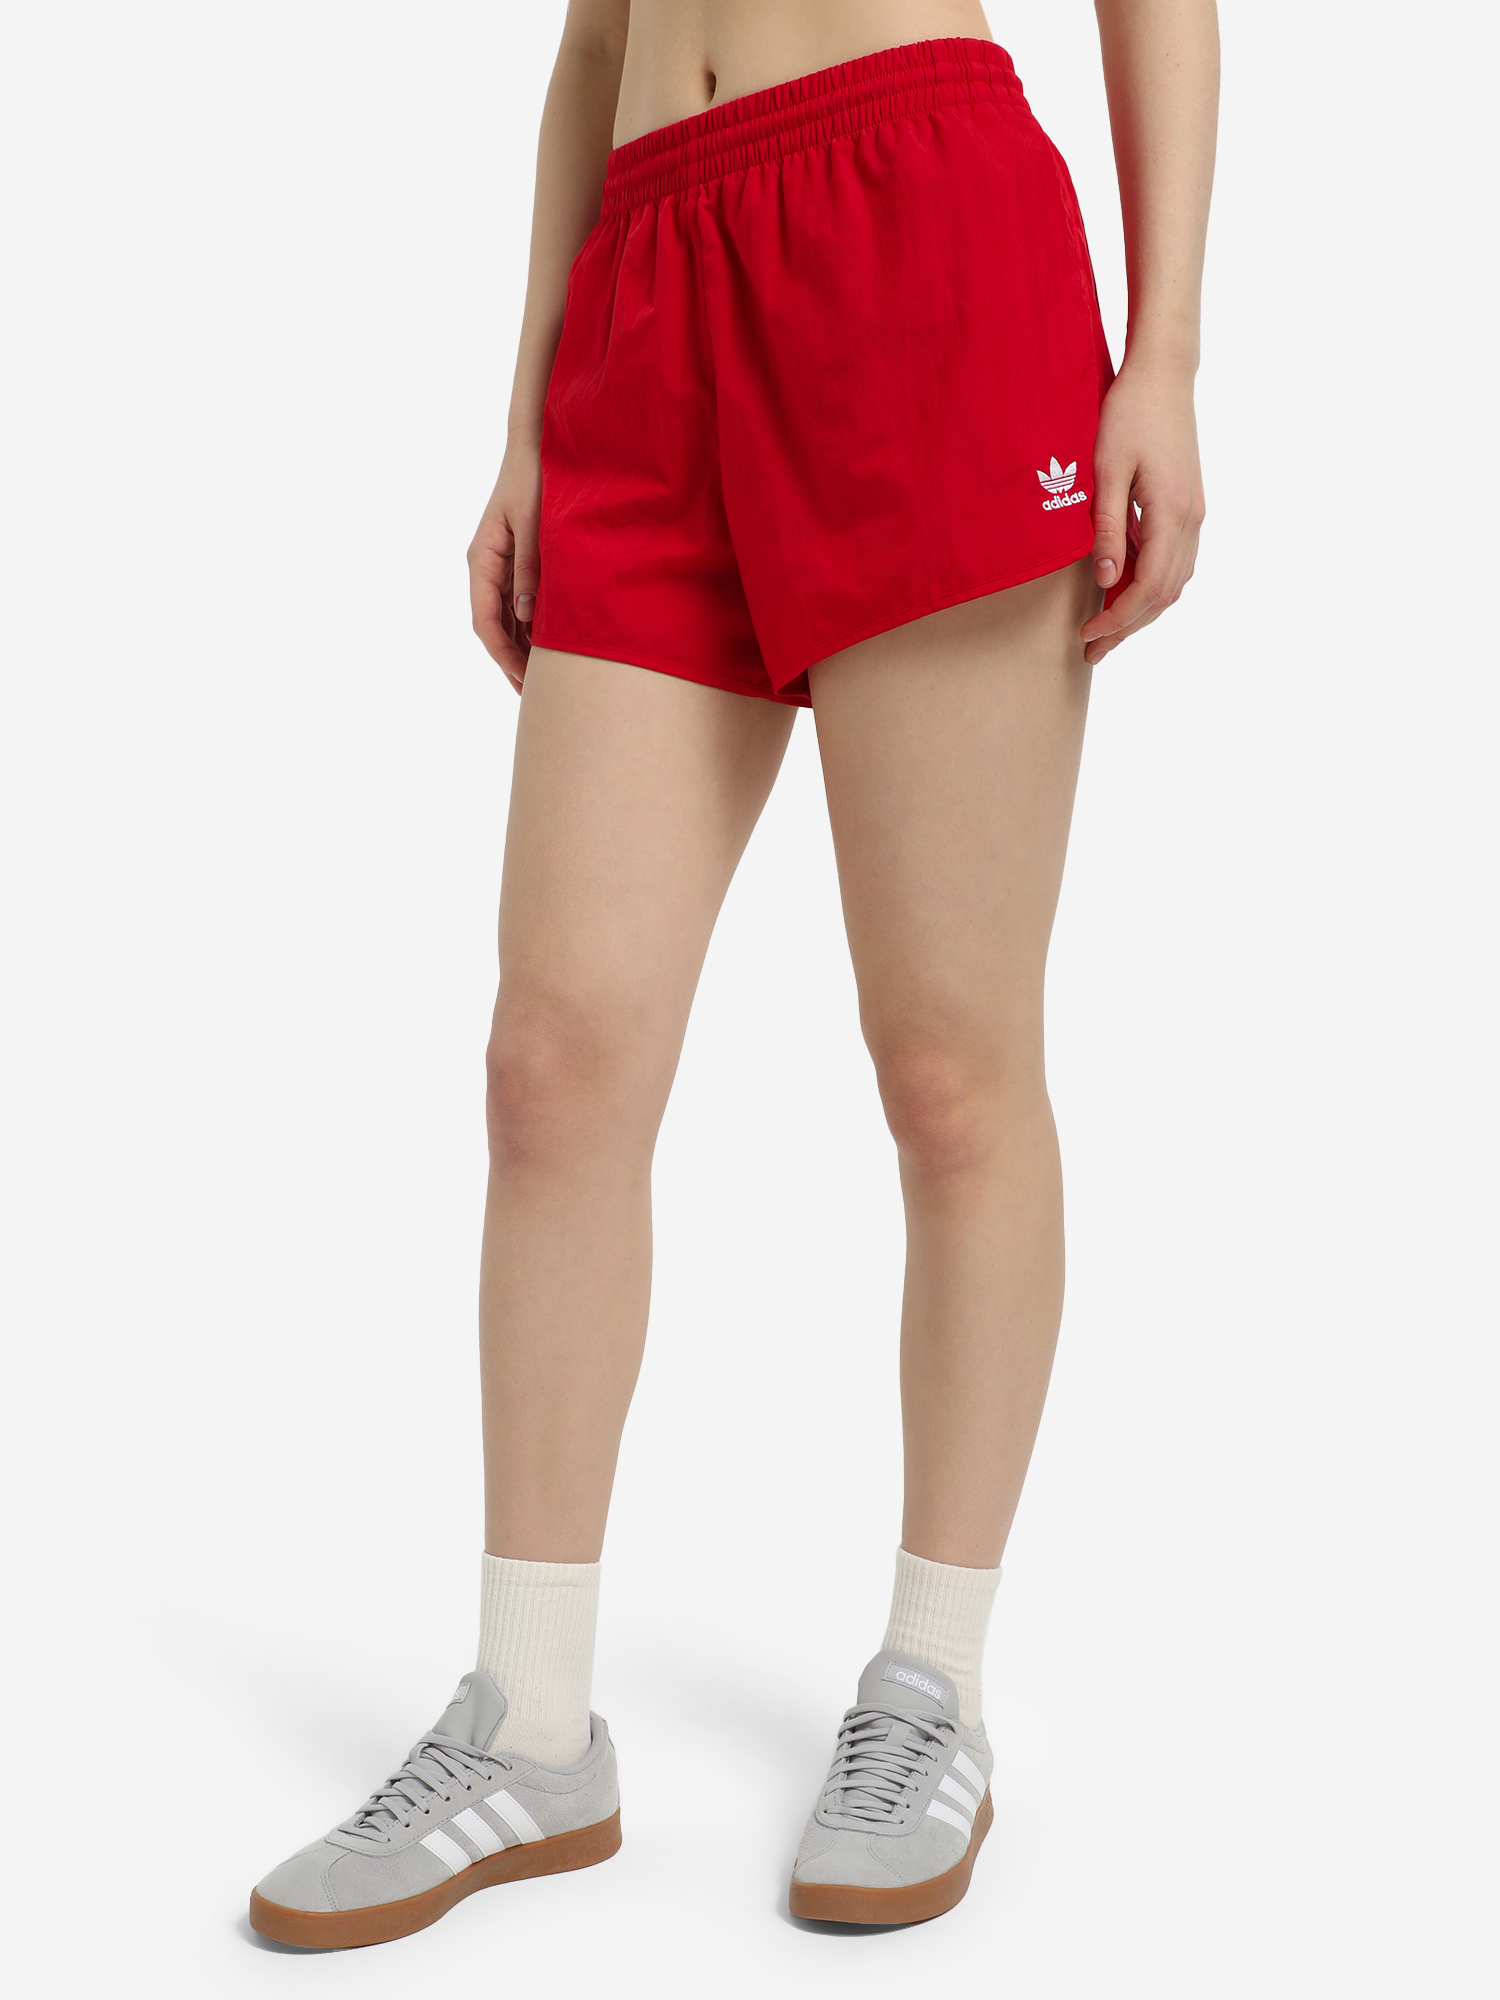 Шорты женские adidas 3-Stripes, Красный шорты мужские adidas